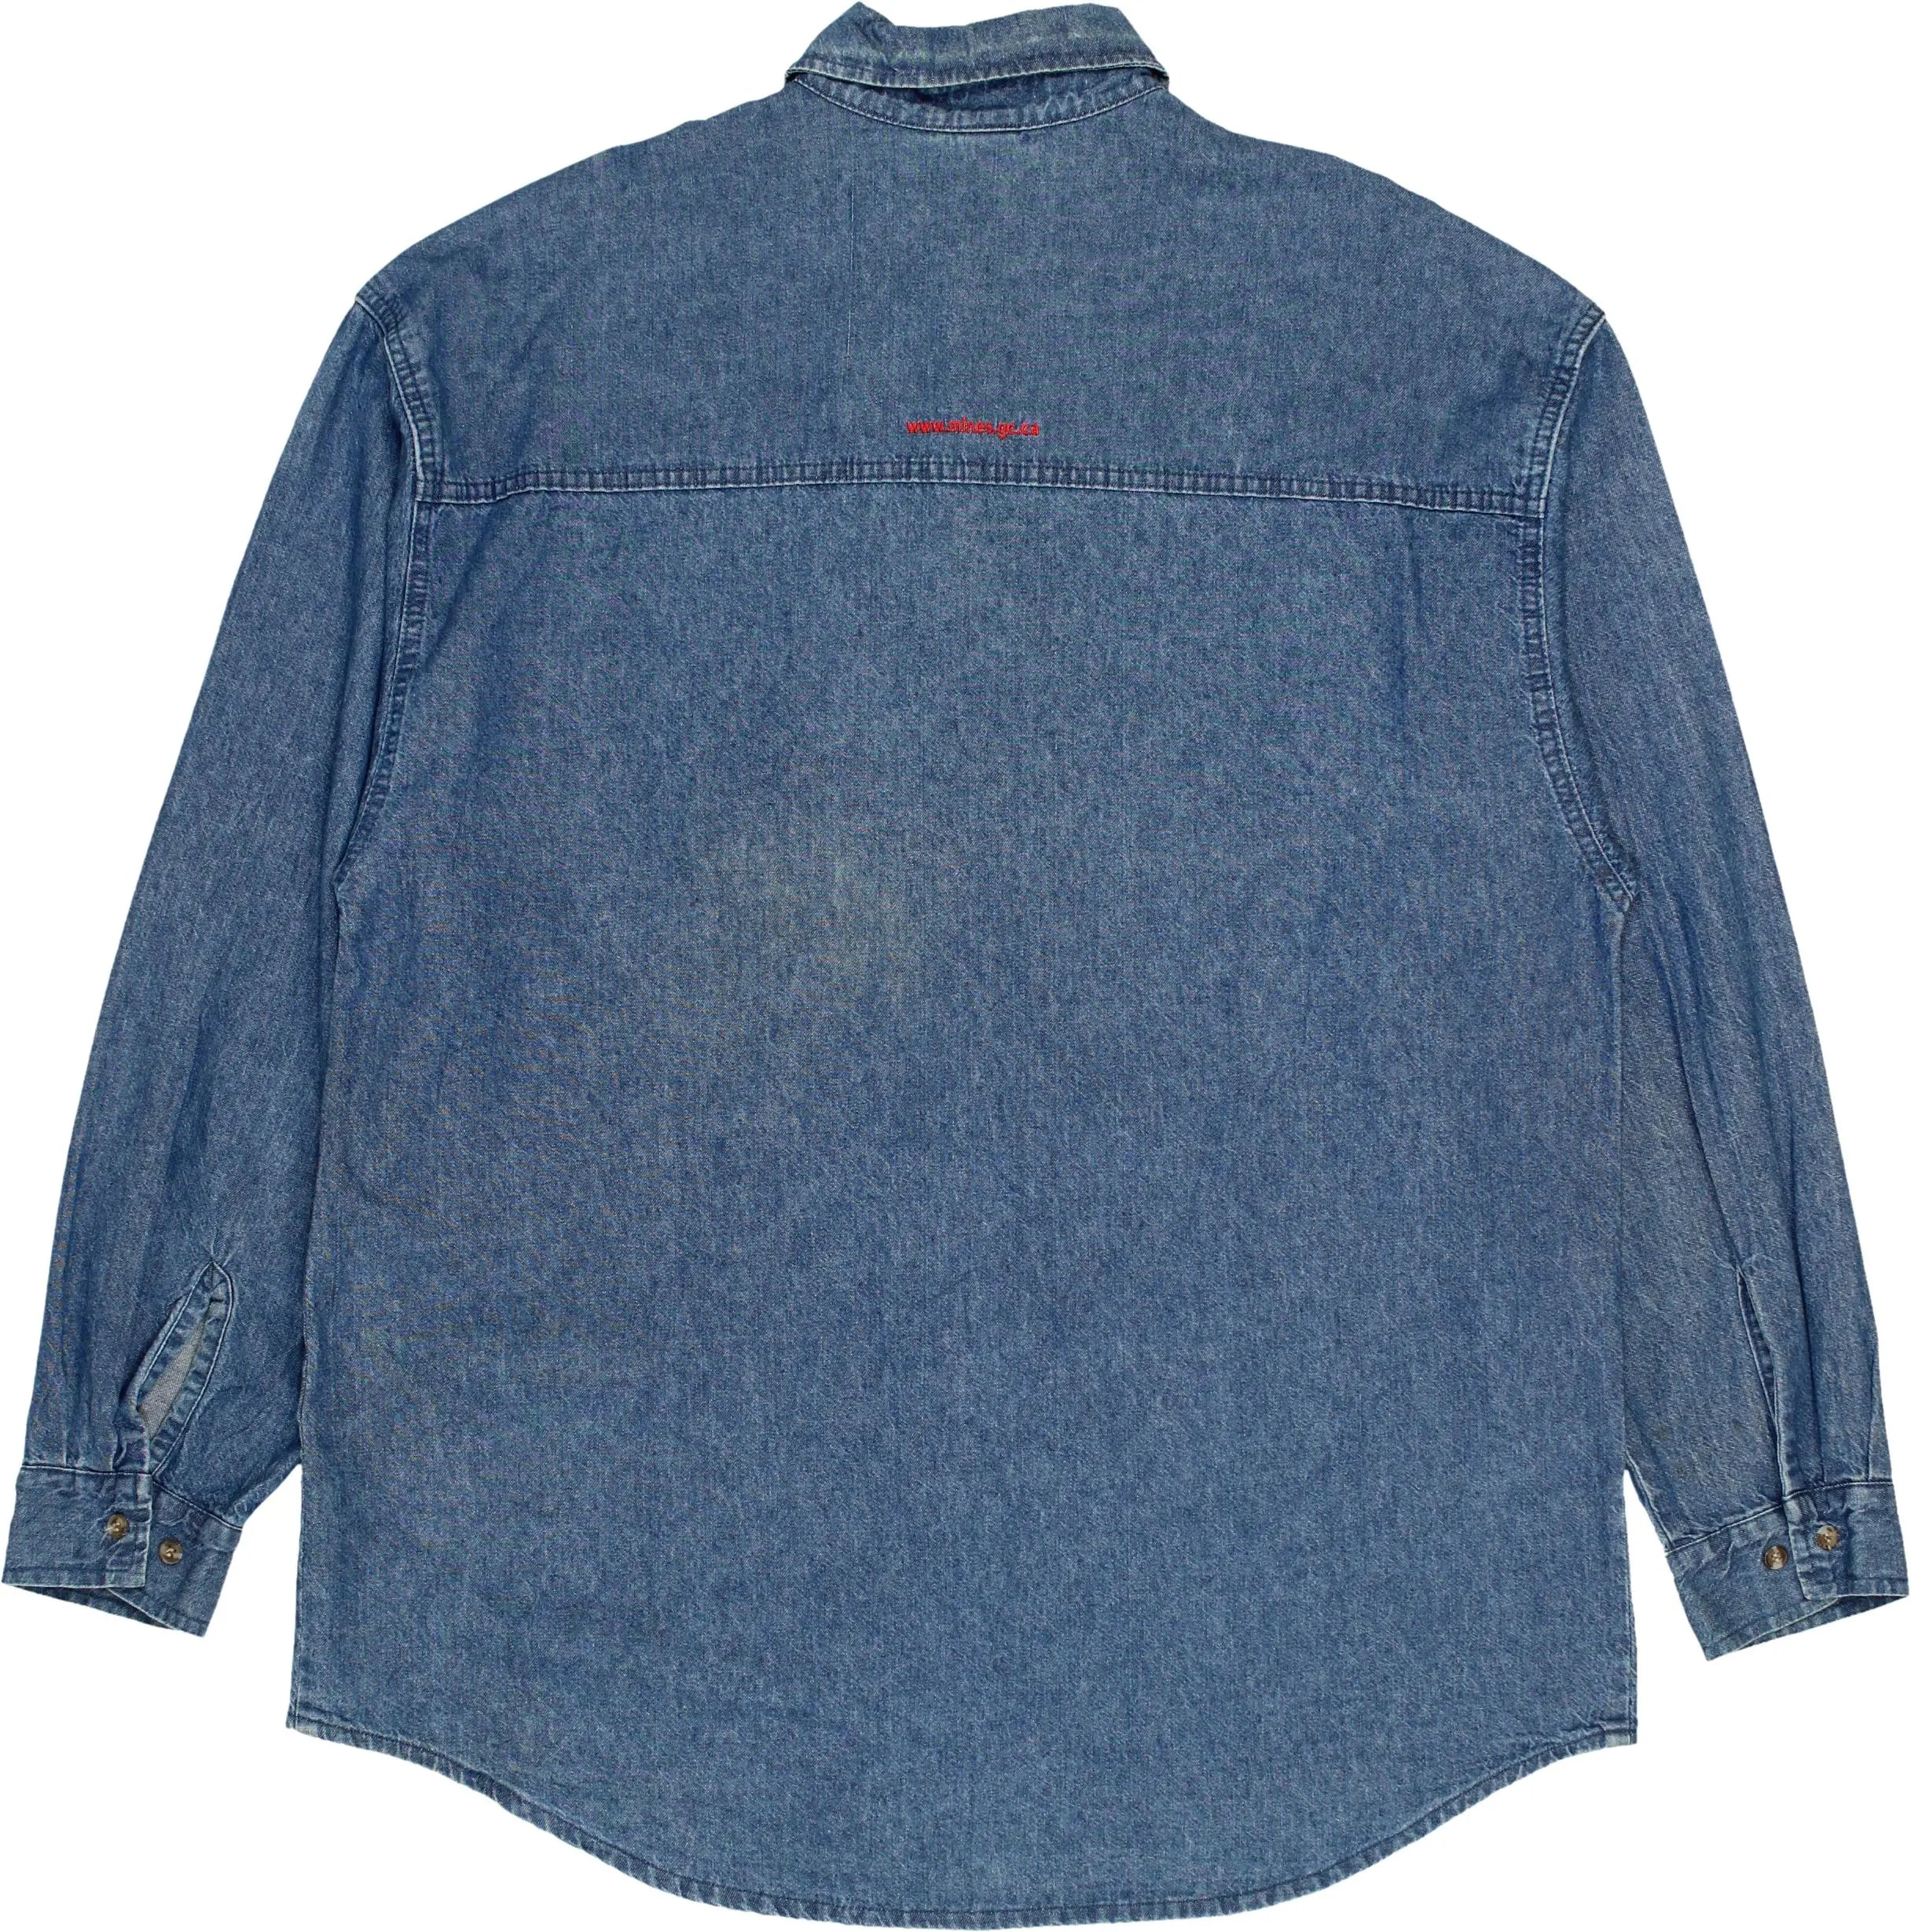 Ash City - Denim Shirt- ThriftTale.com - Vintage and second handclothing